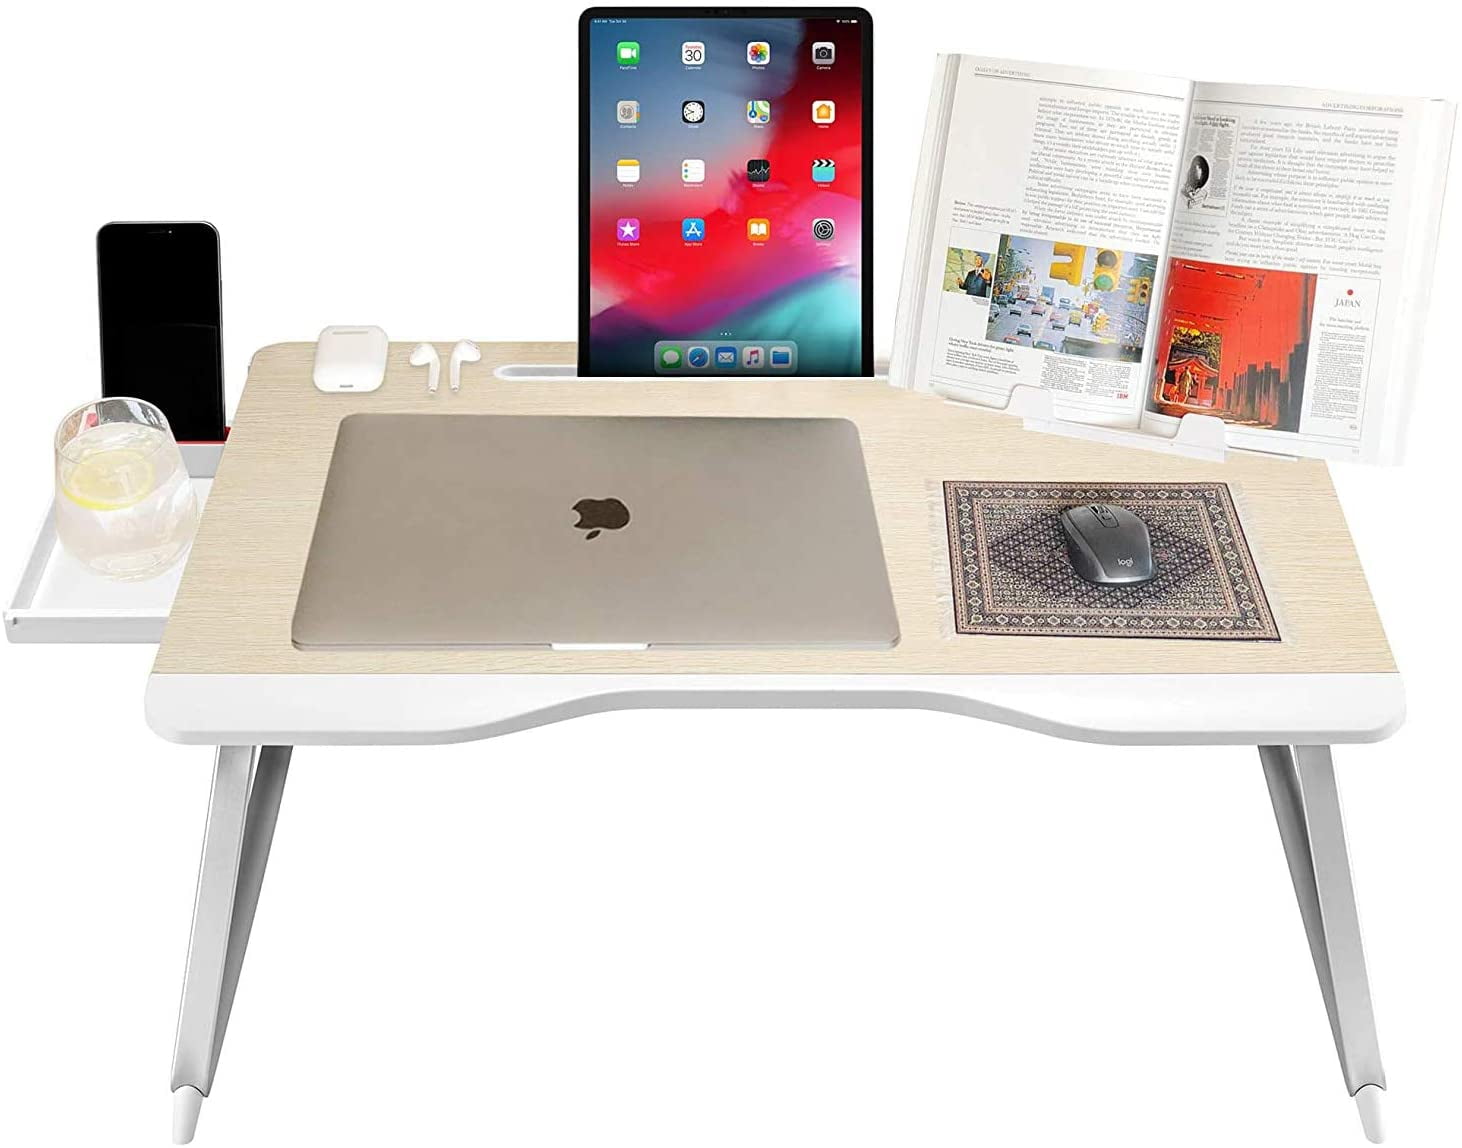 Cooper Desk Pro [XL Adjustable Folding Laptop Desk] - Height & Tilt Angle | Leather Top for Work, Study, Bed | Reading Stand, Drawer (Midnight Black)